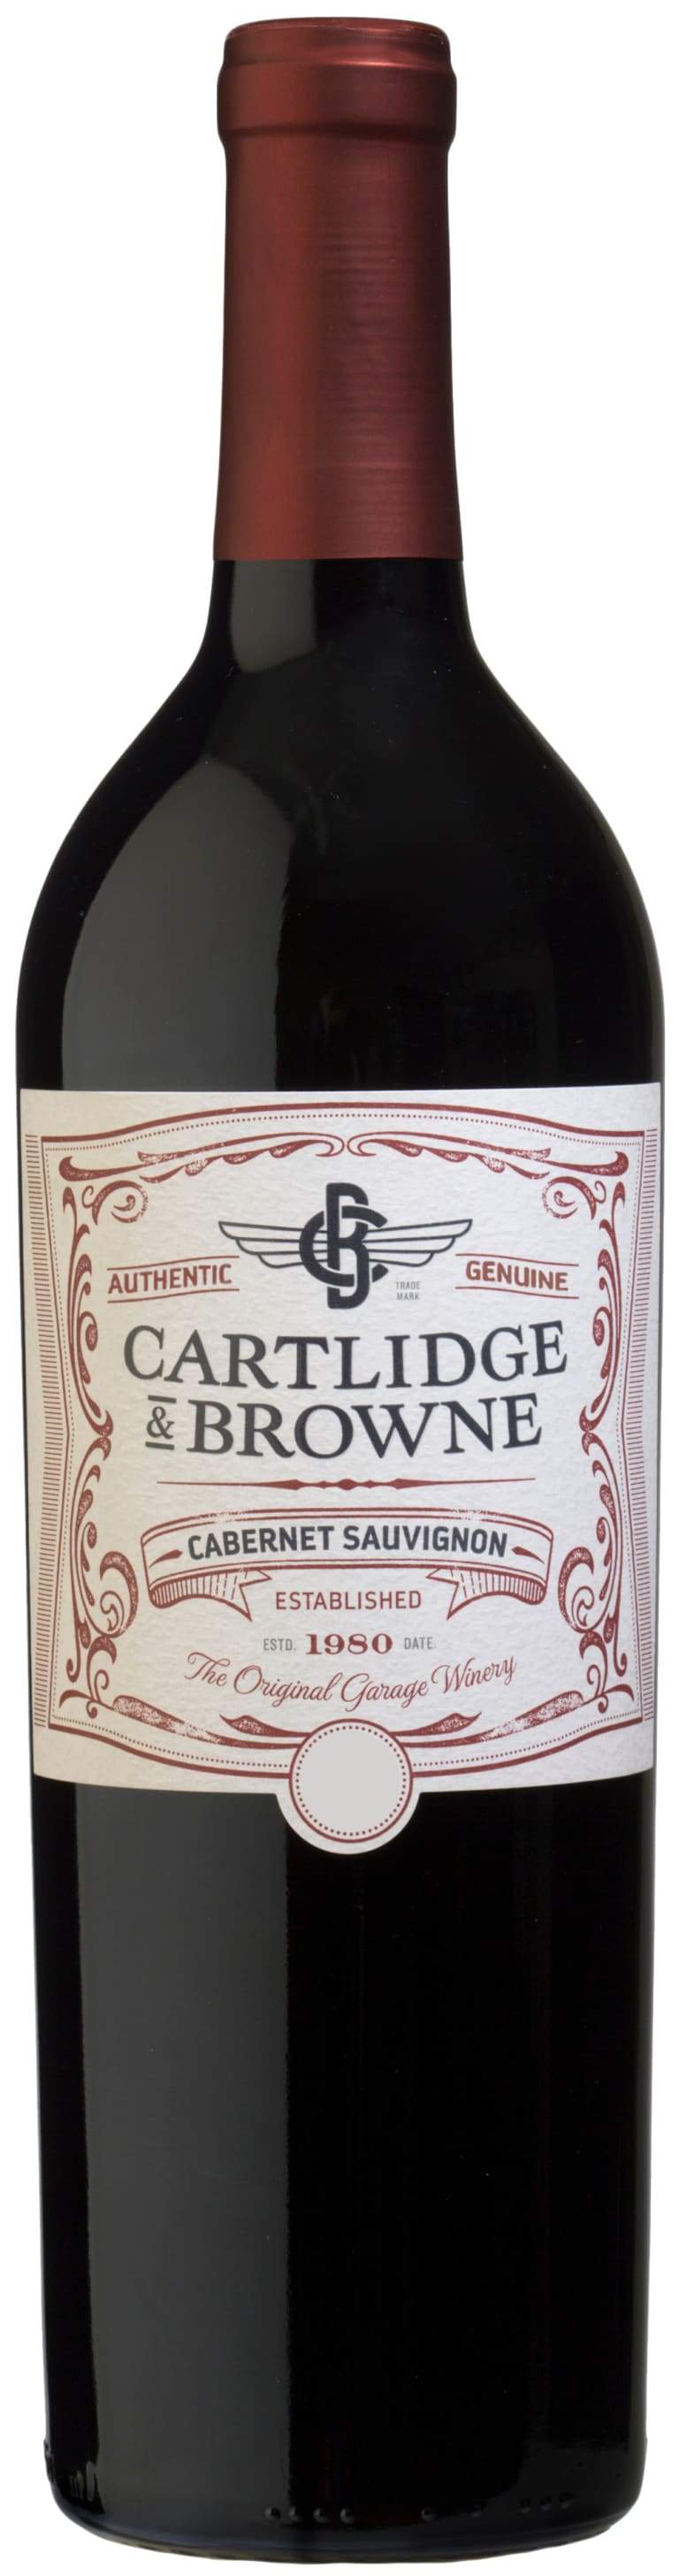 Cartlidge & Browne Cabernet Sauvignon 2017